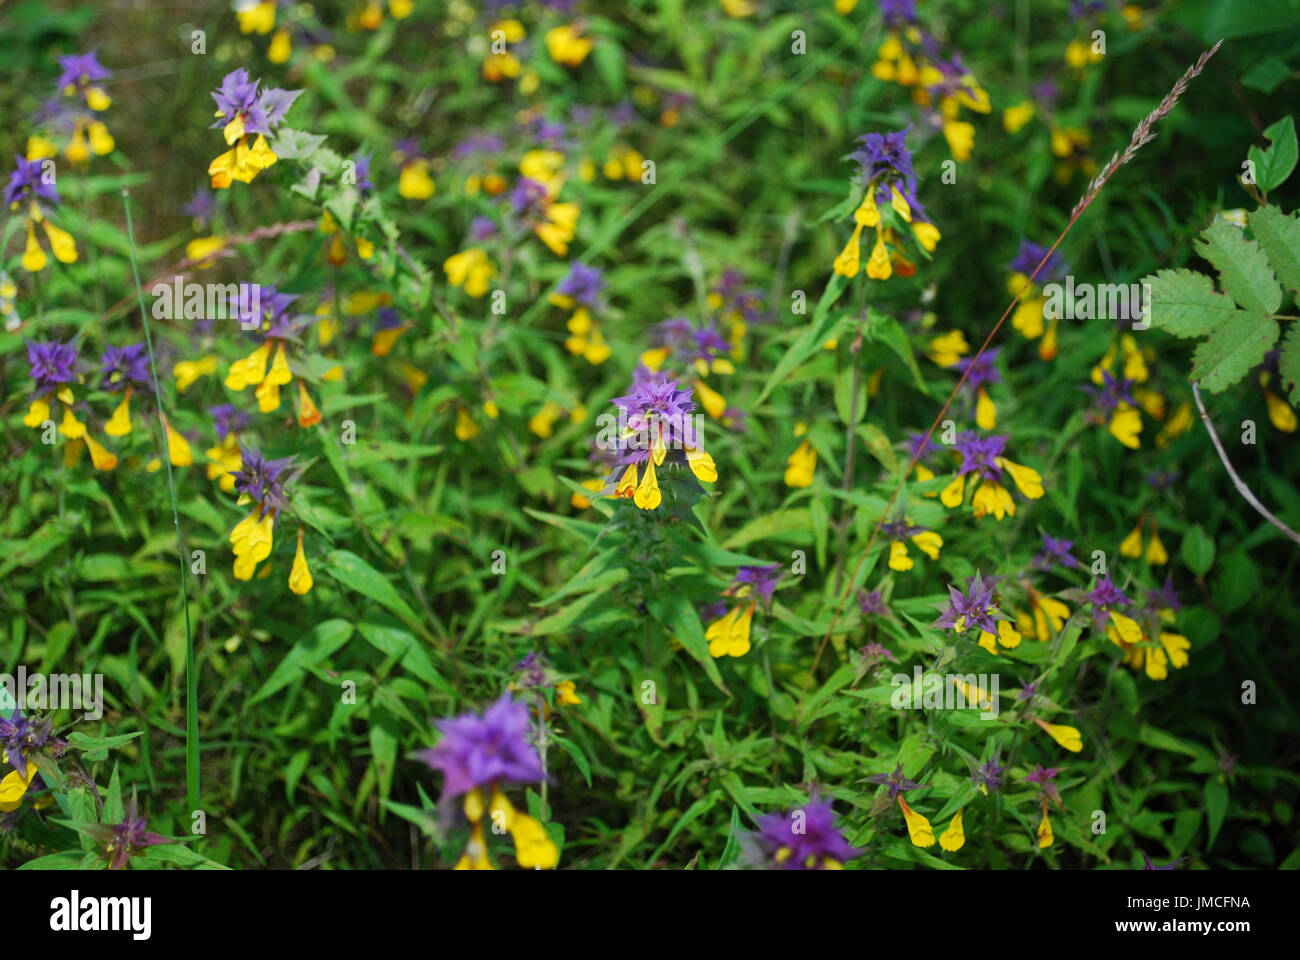 Melampyrum nemorosum is an herbaceous flowering plant in the broomrape family, Orobanchaceae. Stock Photo